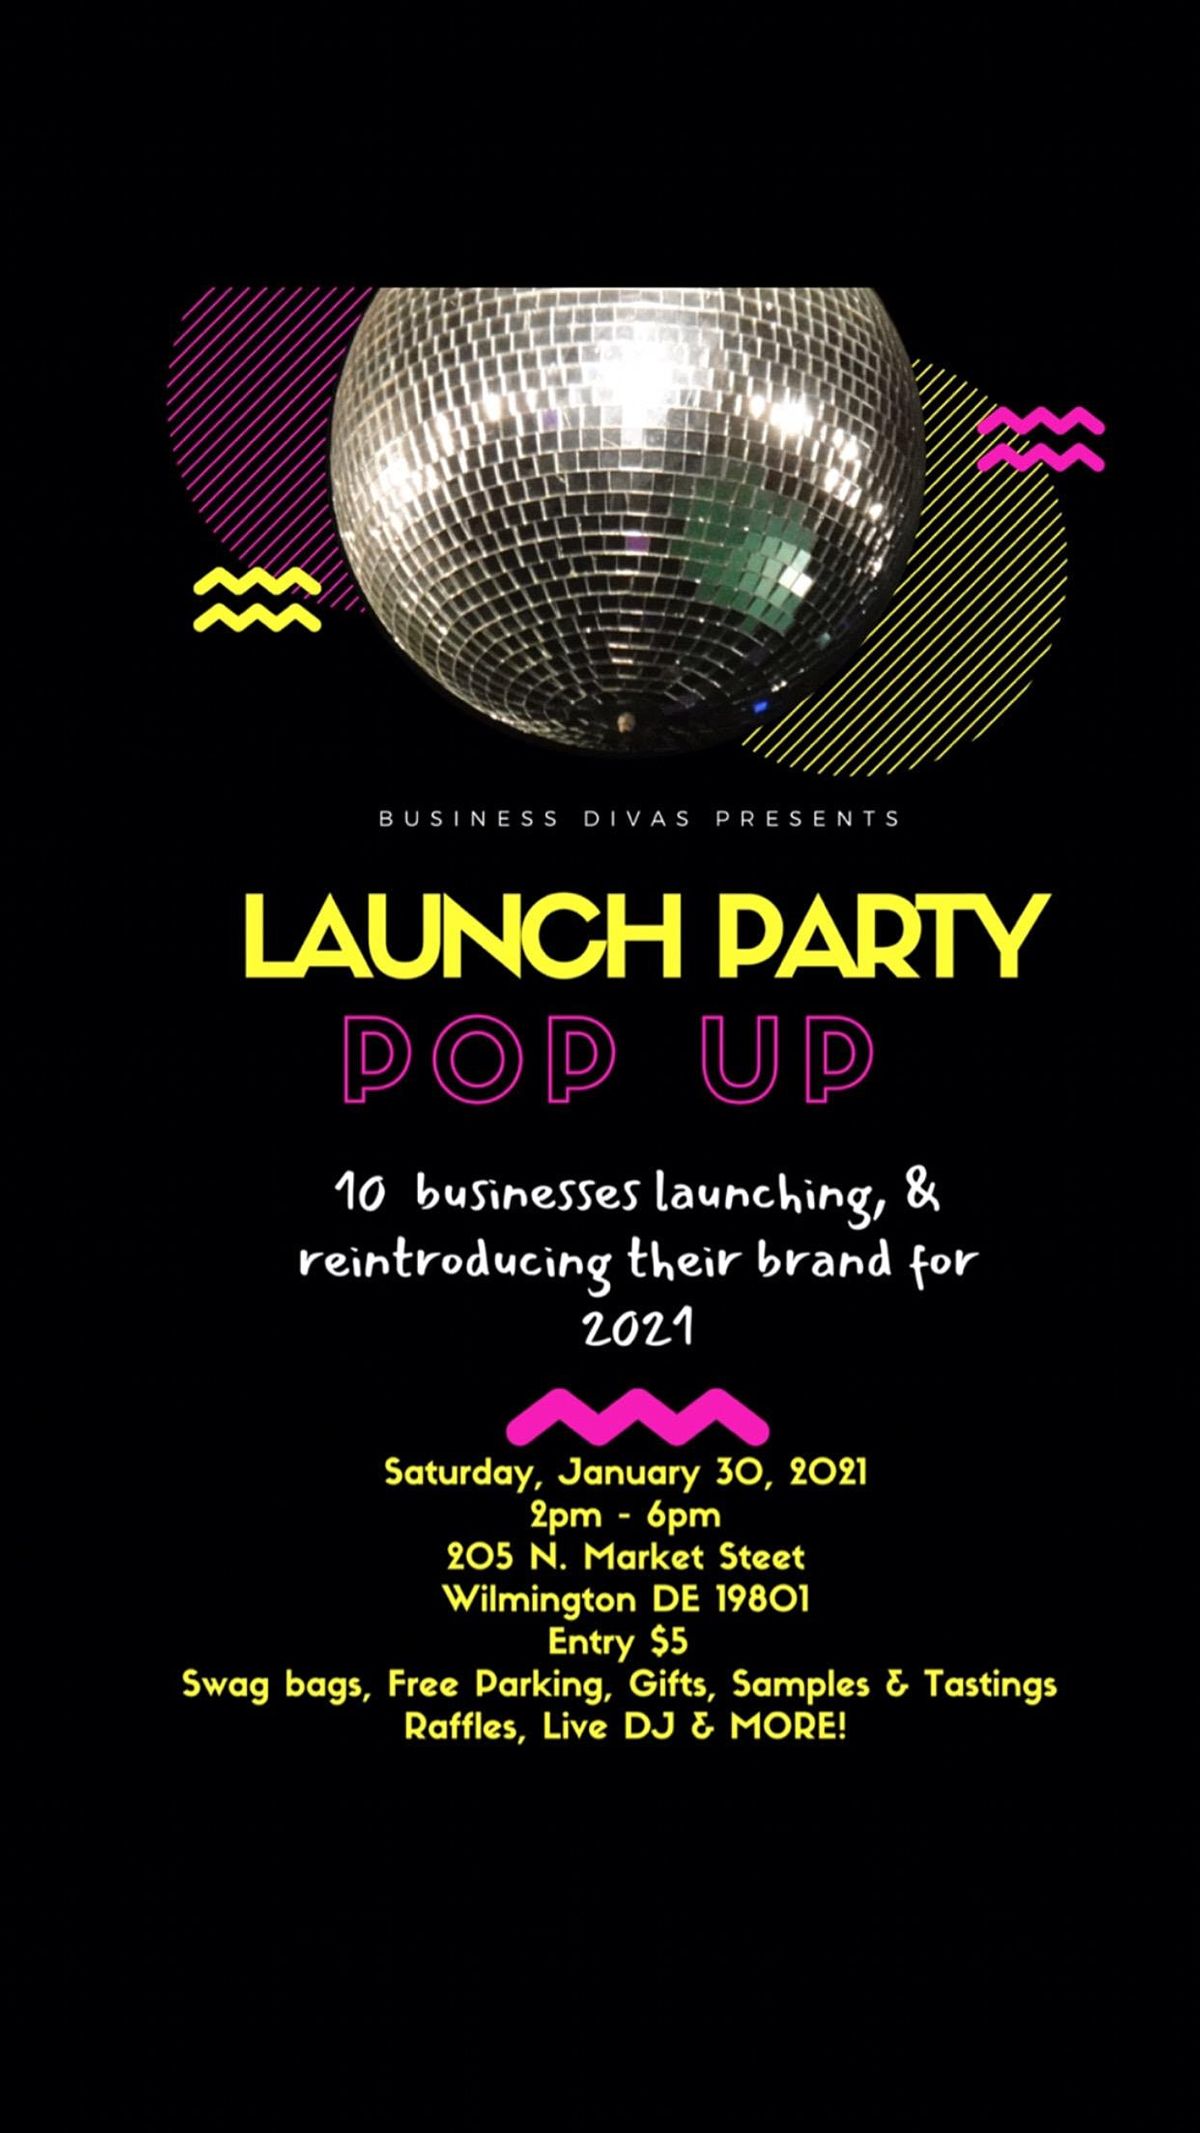 Launch Party Pop Up